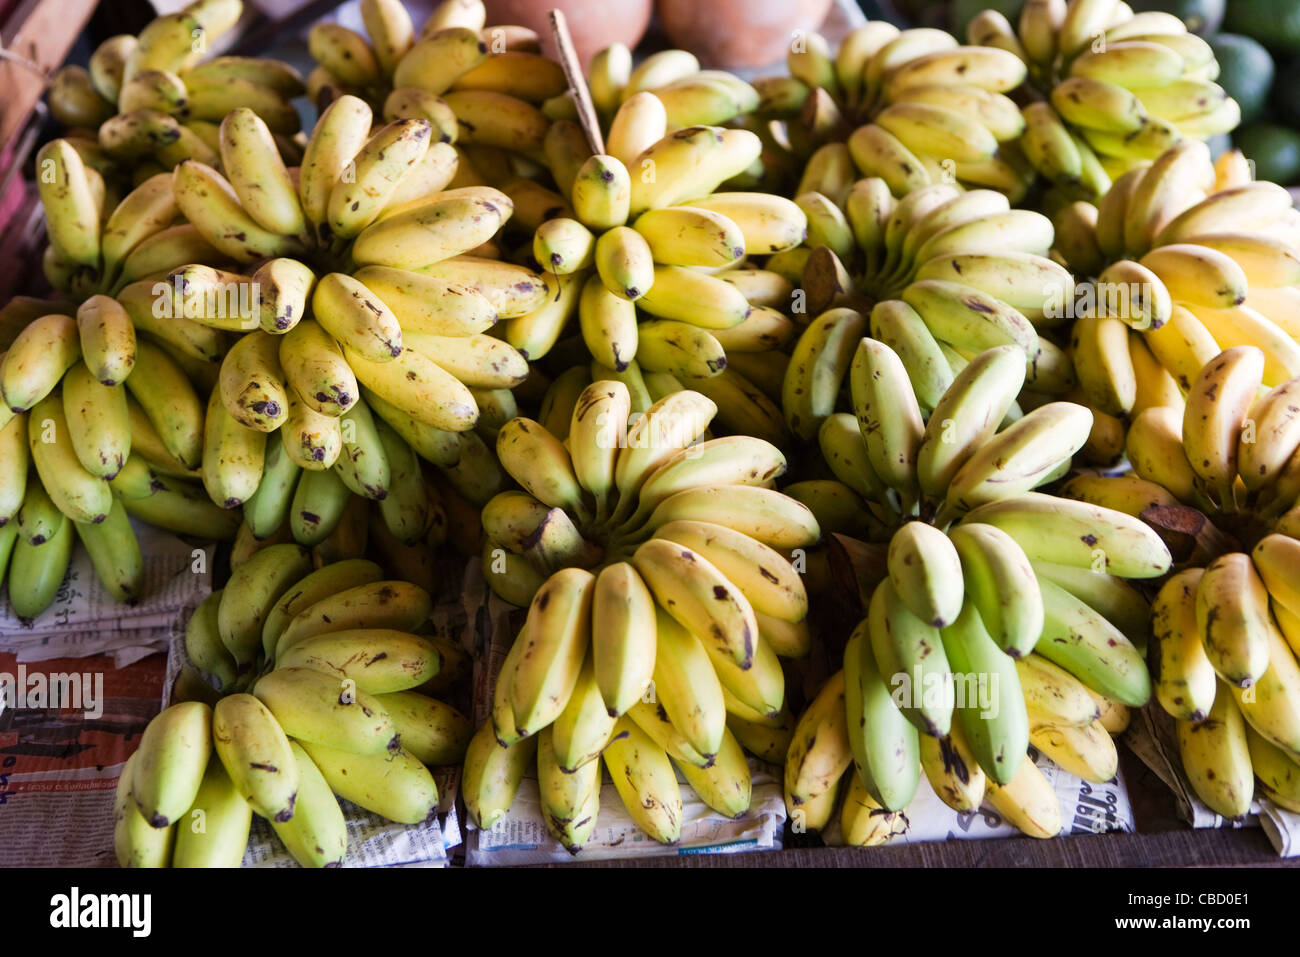 Fresh bananas in market Stock Photo